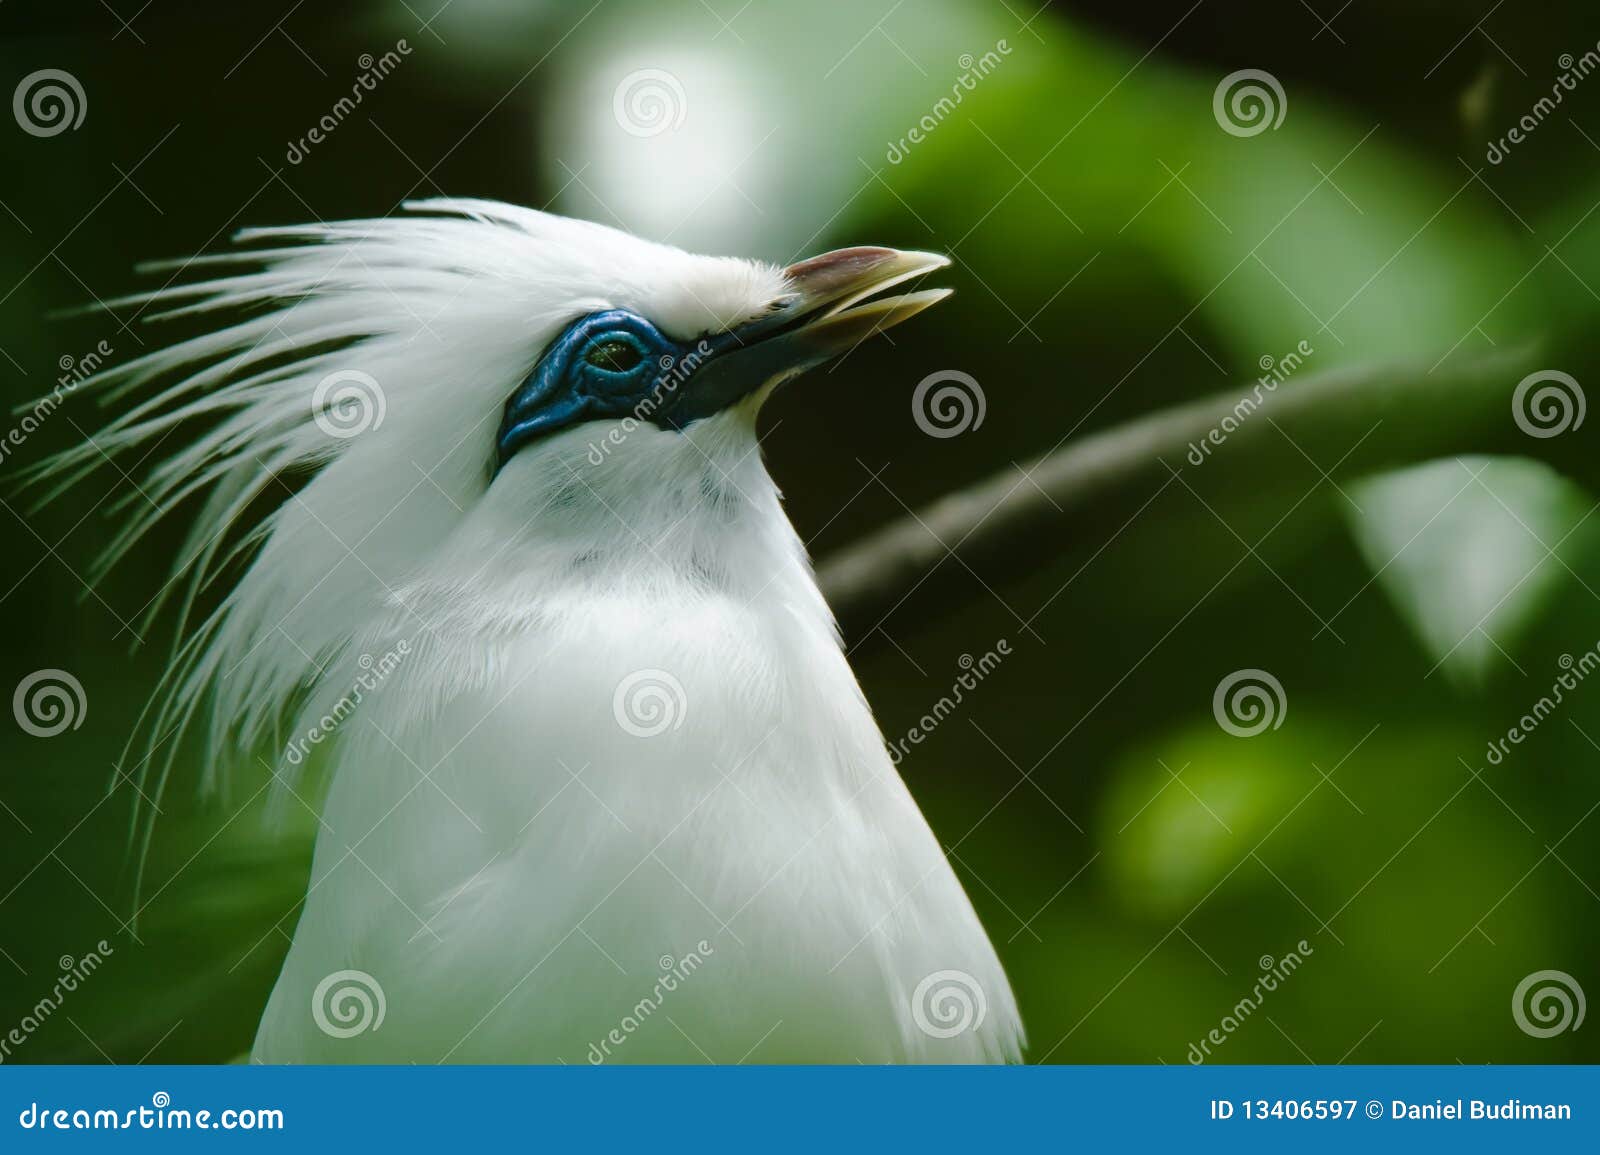 bali starling bird